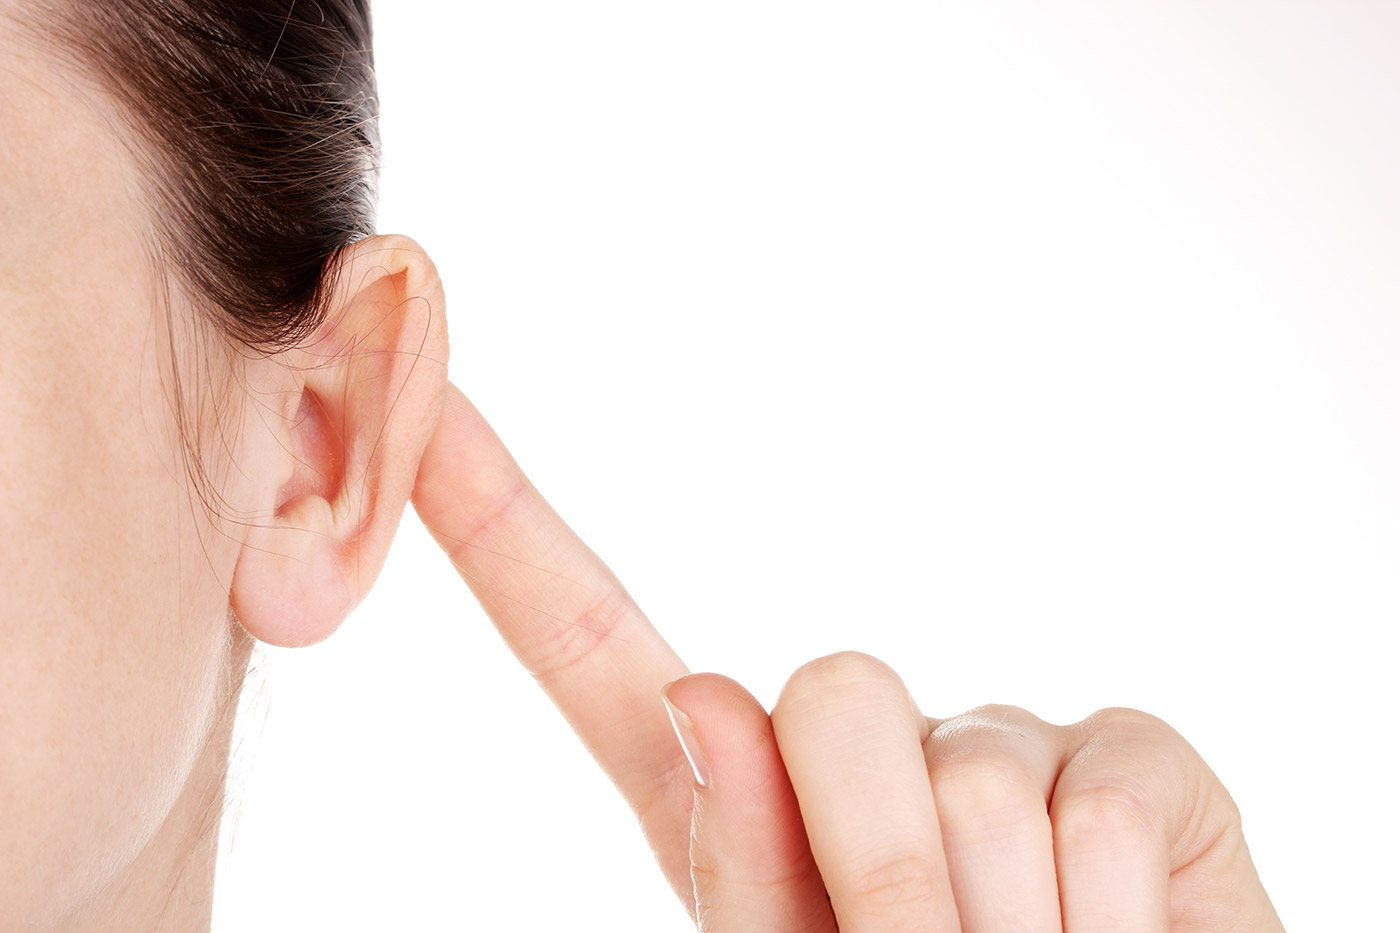 Claves para proteger tus oídos - Noticias Grupo Recoletas